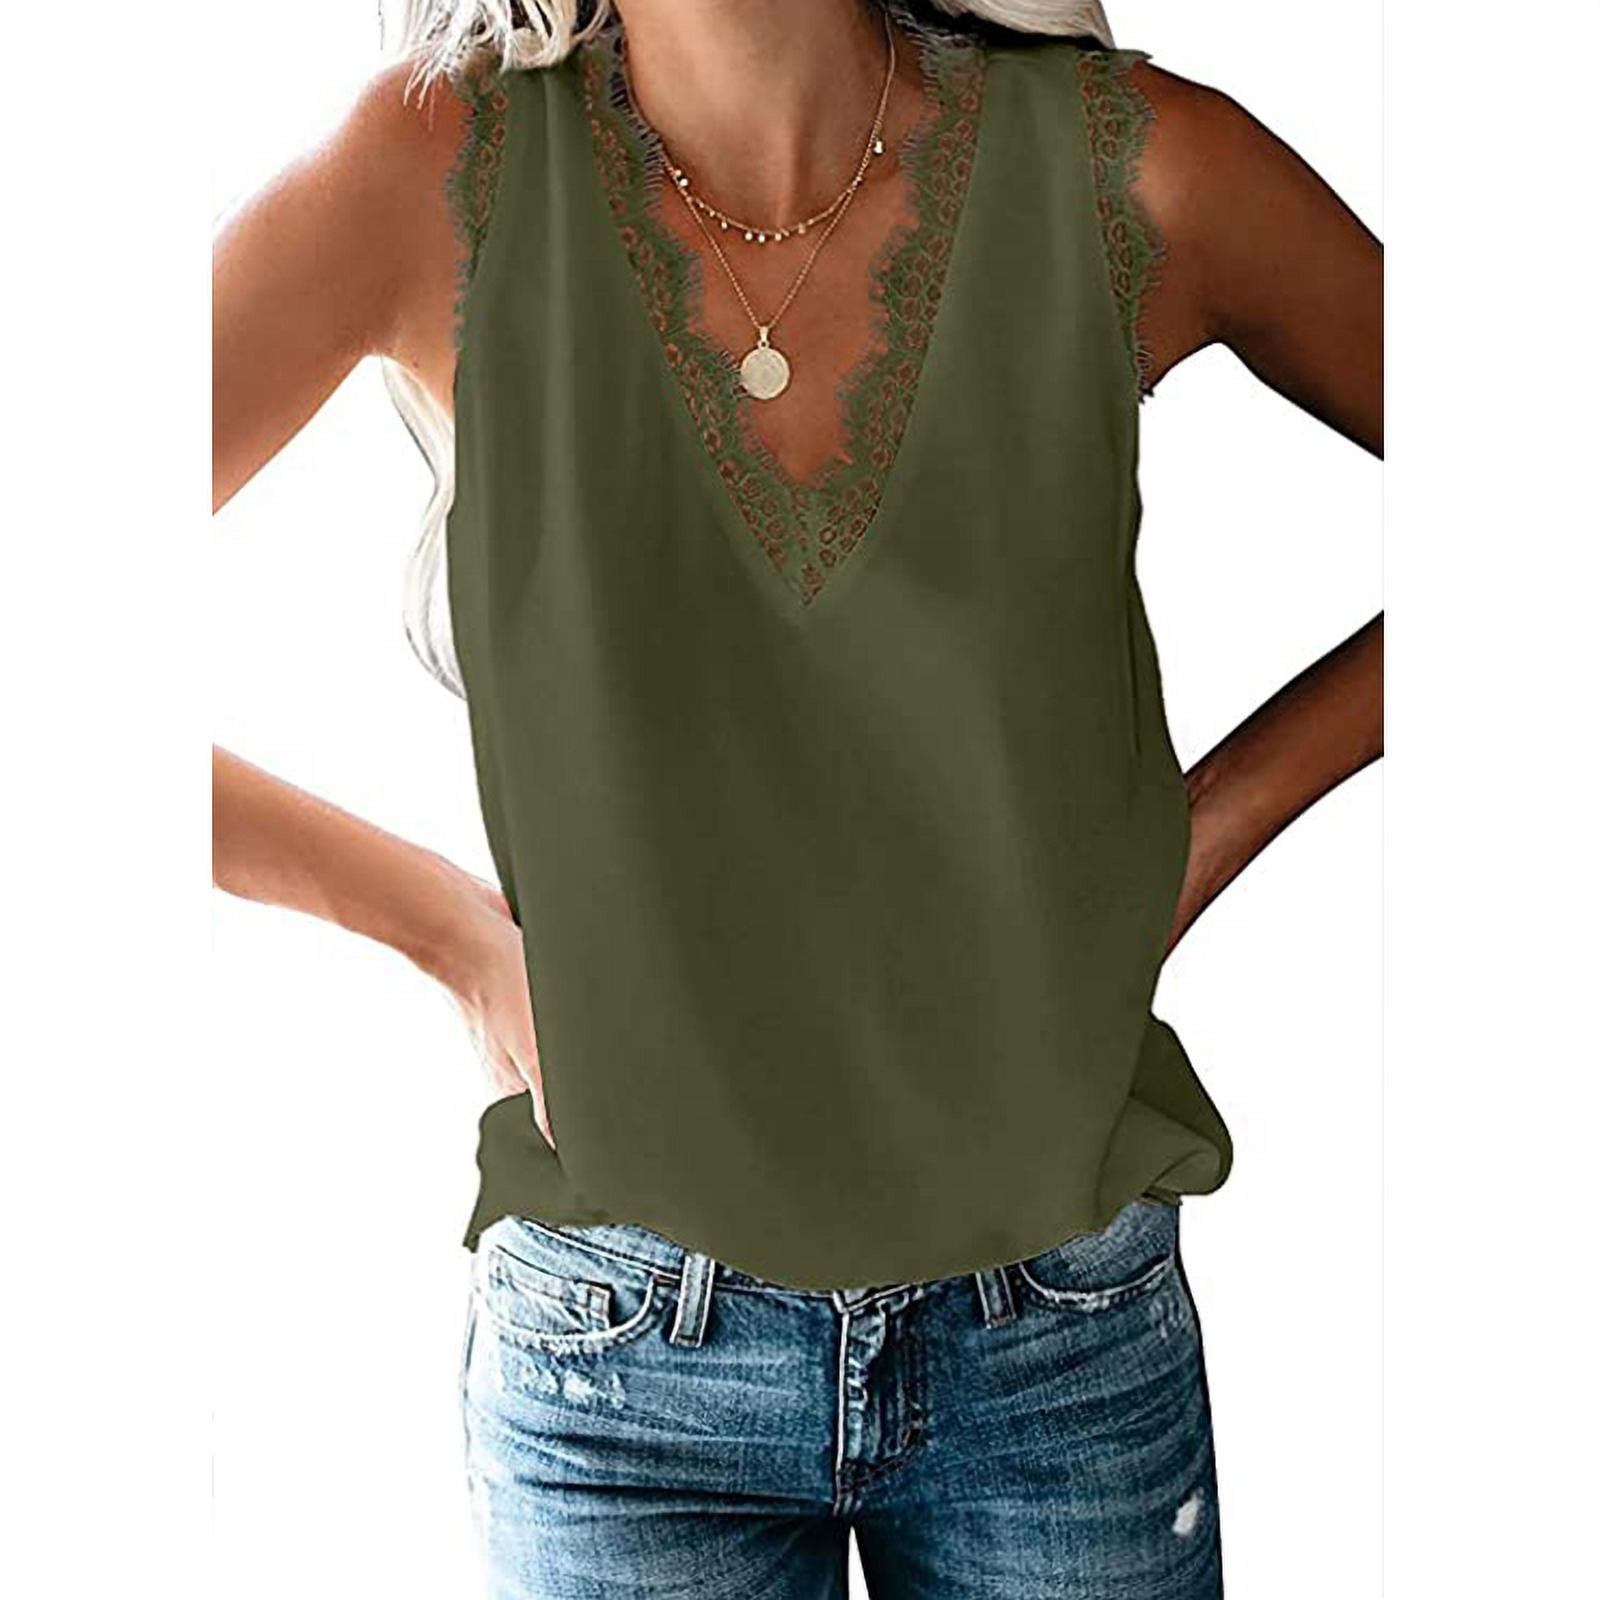 FARYSAYS Womens Summer Sleeveless Round Neck Tank Tops Casual Loose Blouse Shirts 